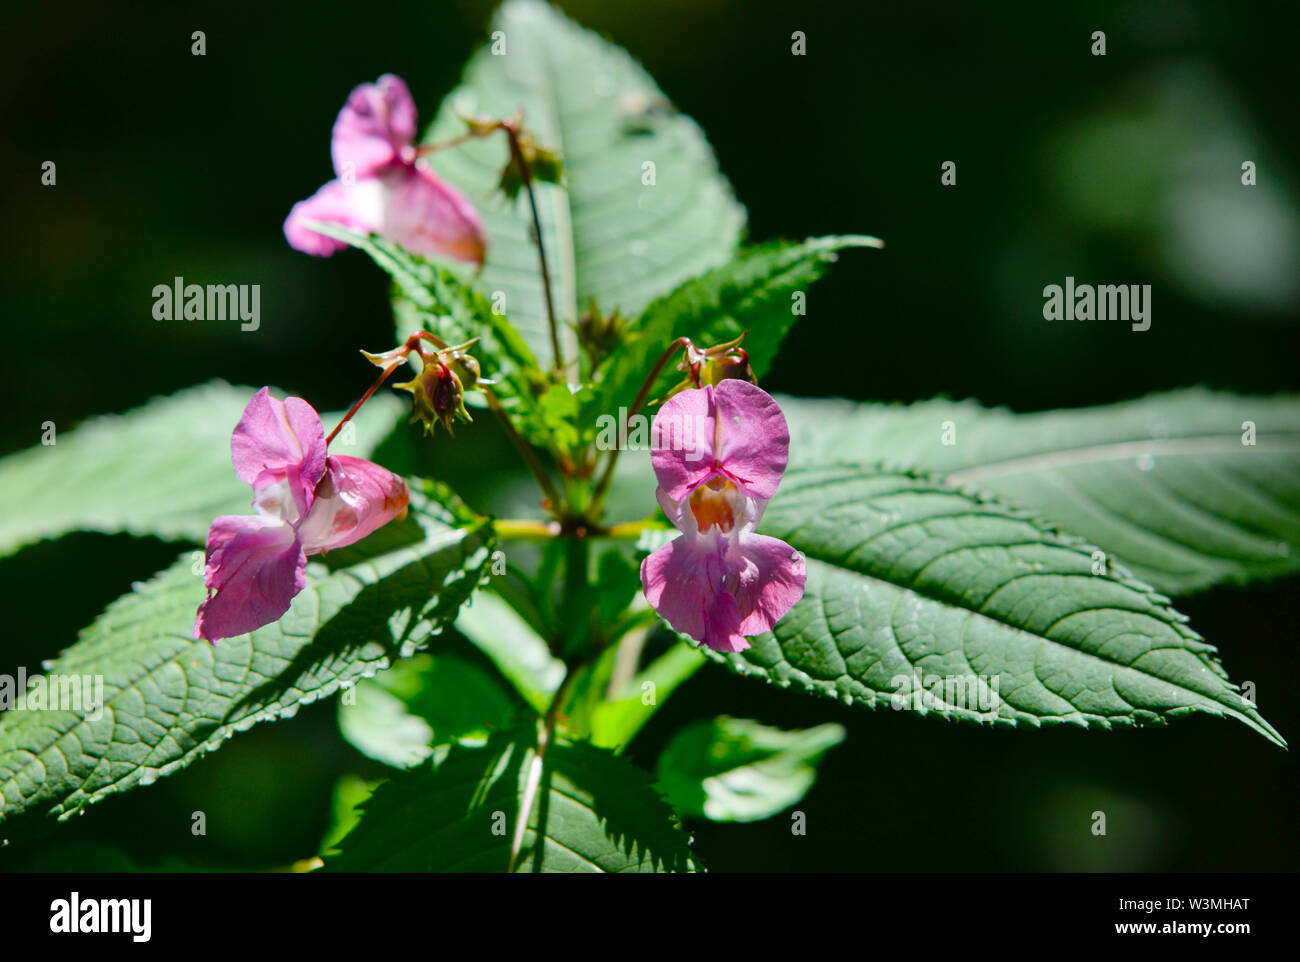 The invasive Himalayan Balsam plant Stock Photo